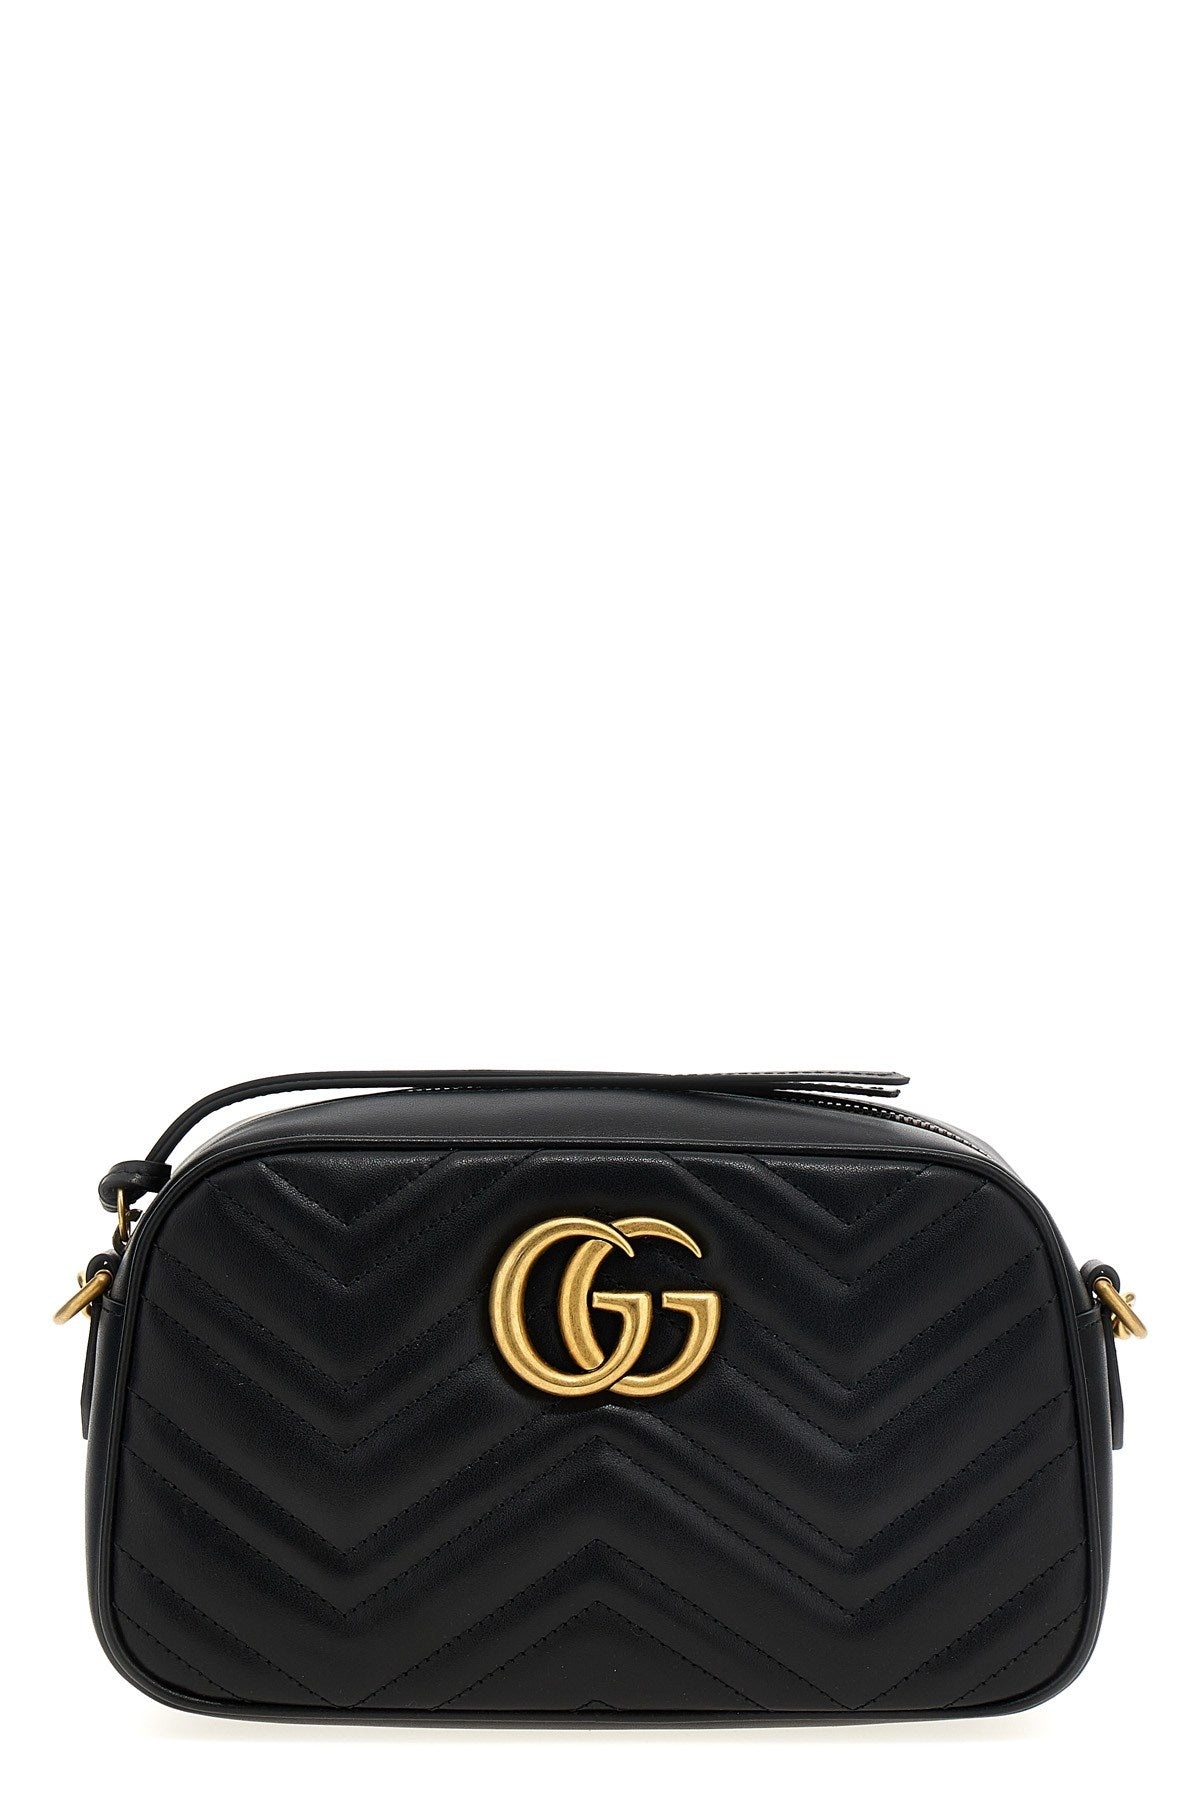 Gucci Women 'Gg Marmont 2.0’ Small Crossbody Bag - 1